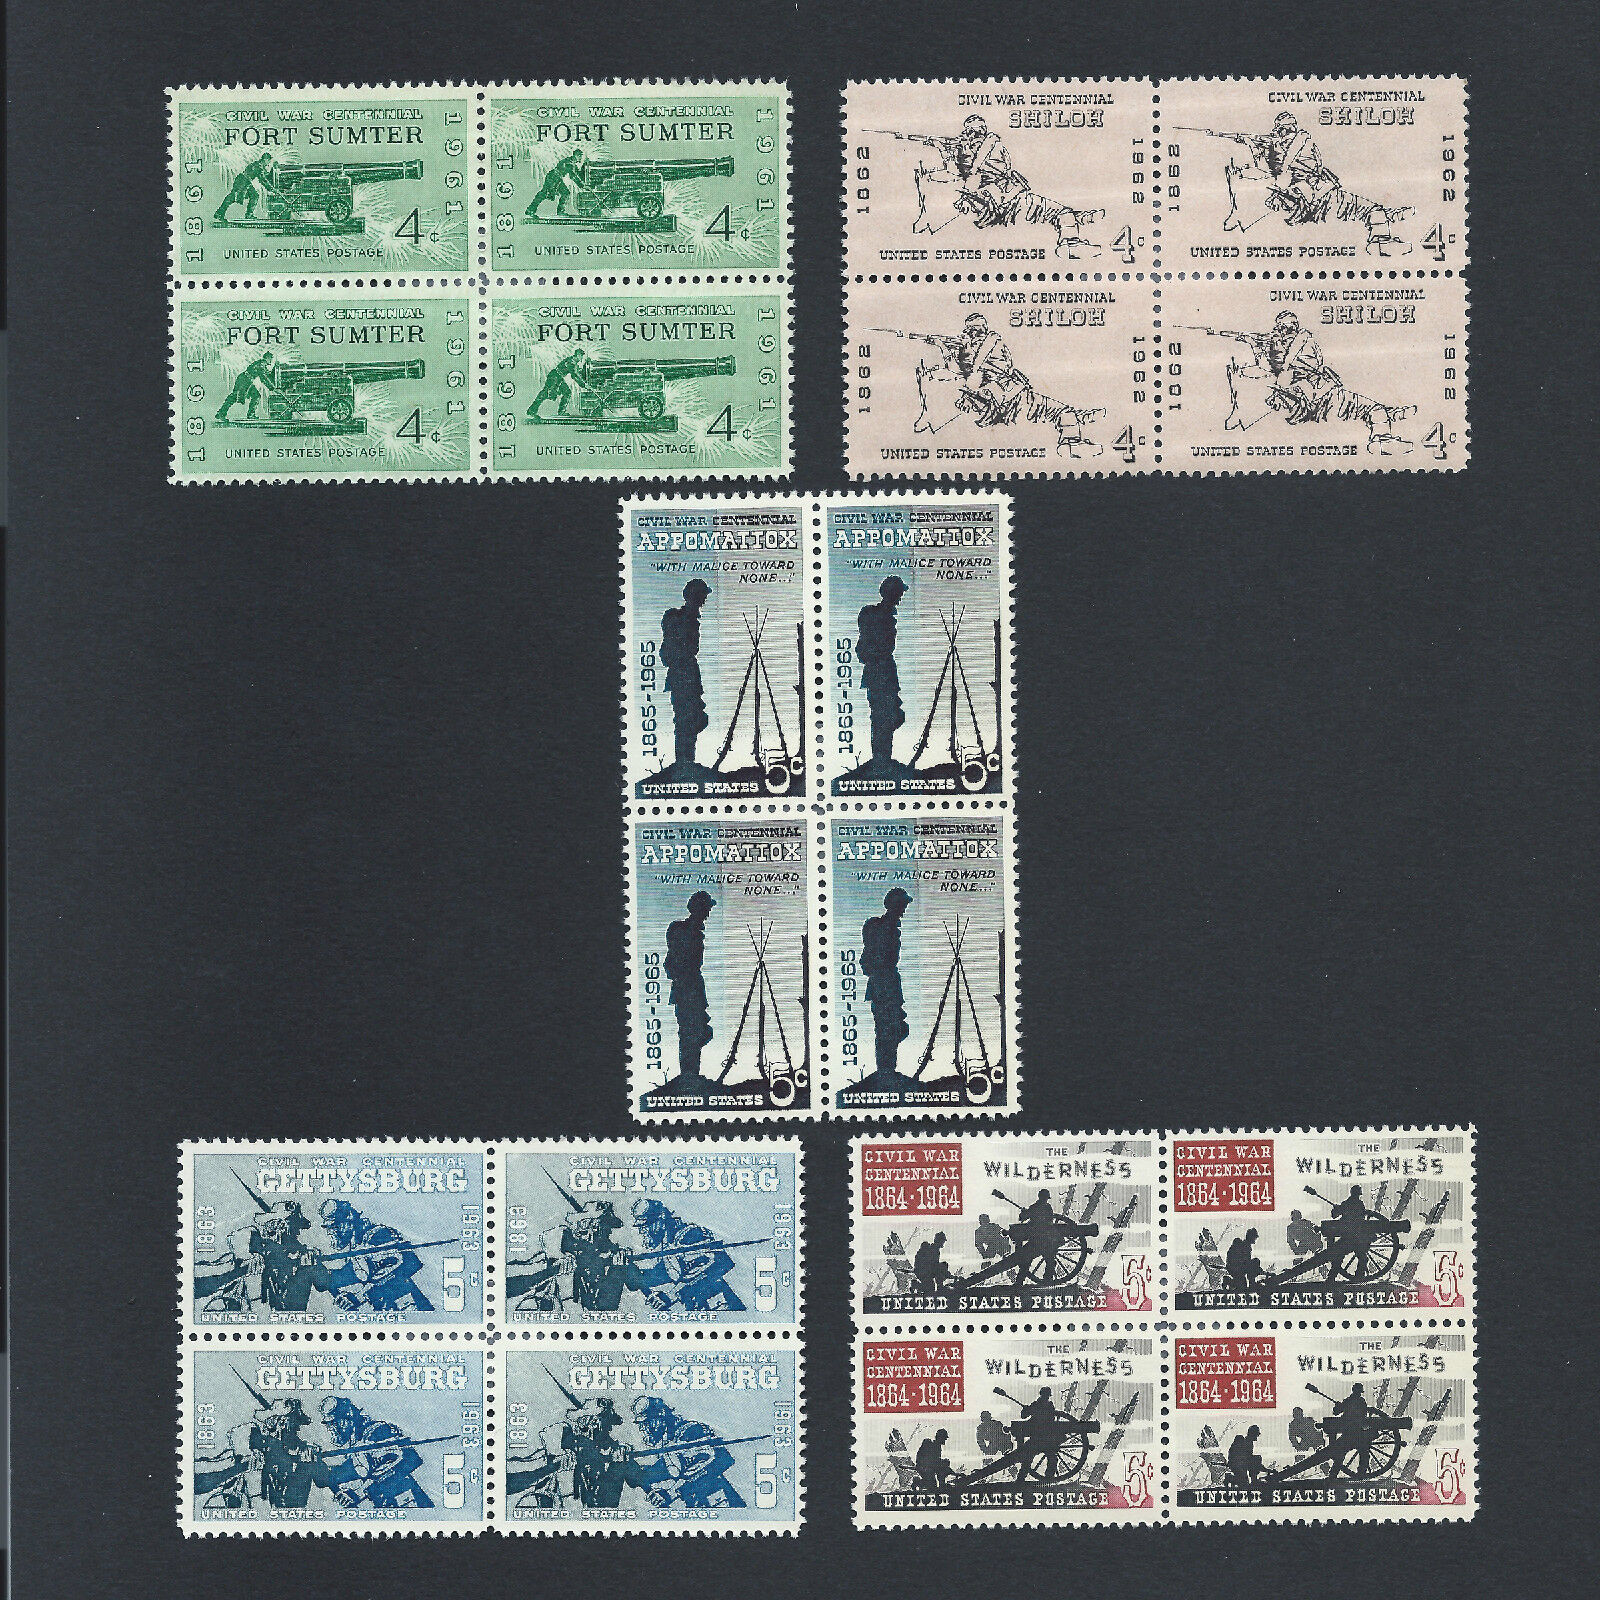 Vintage Mint Sets of 5 Civil War Centennial Stamps Over 61 Years Old L@@K